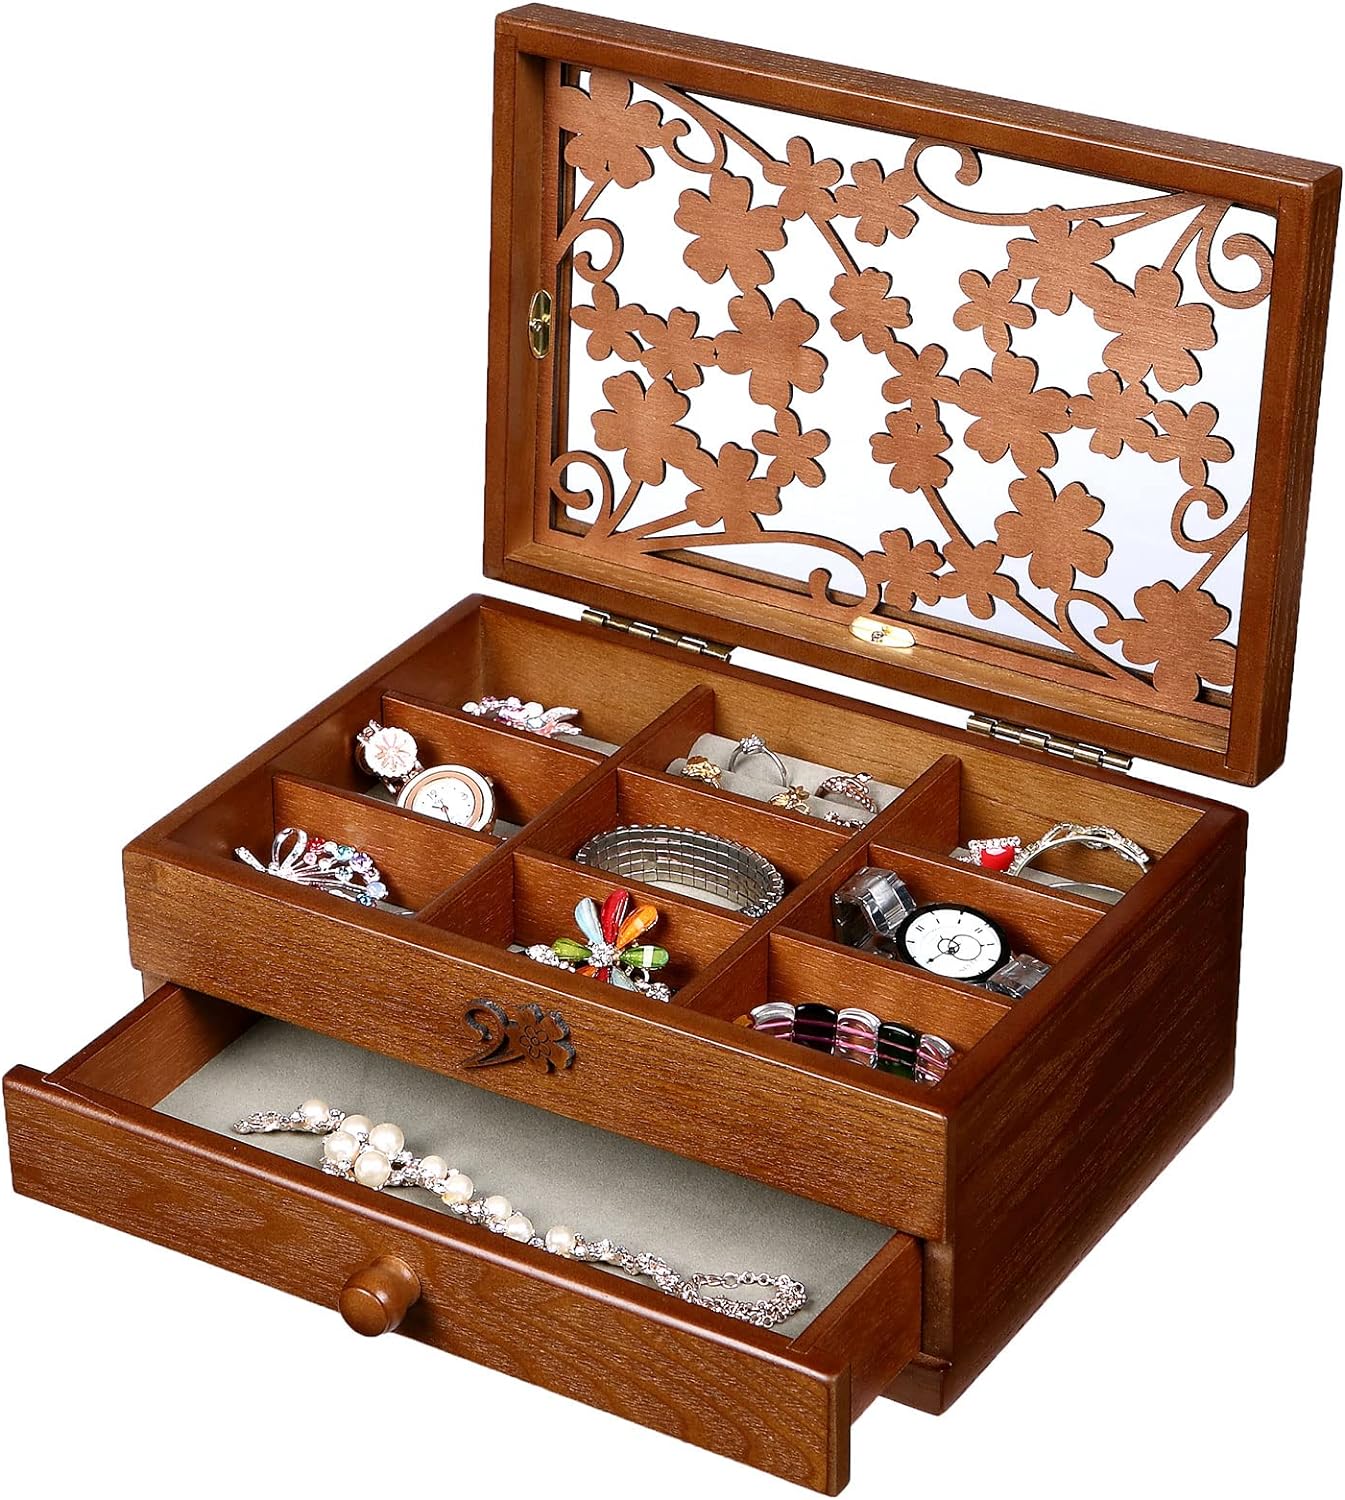 Changsuo Wooden Jewelry Box for Women with, Drawers, Small Jewelry Storage Organizer